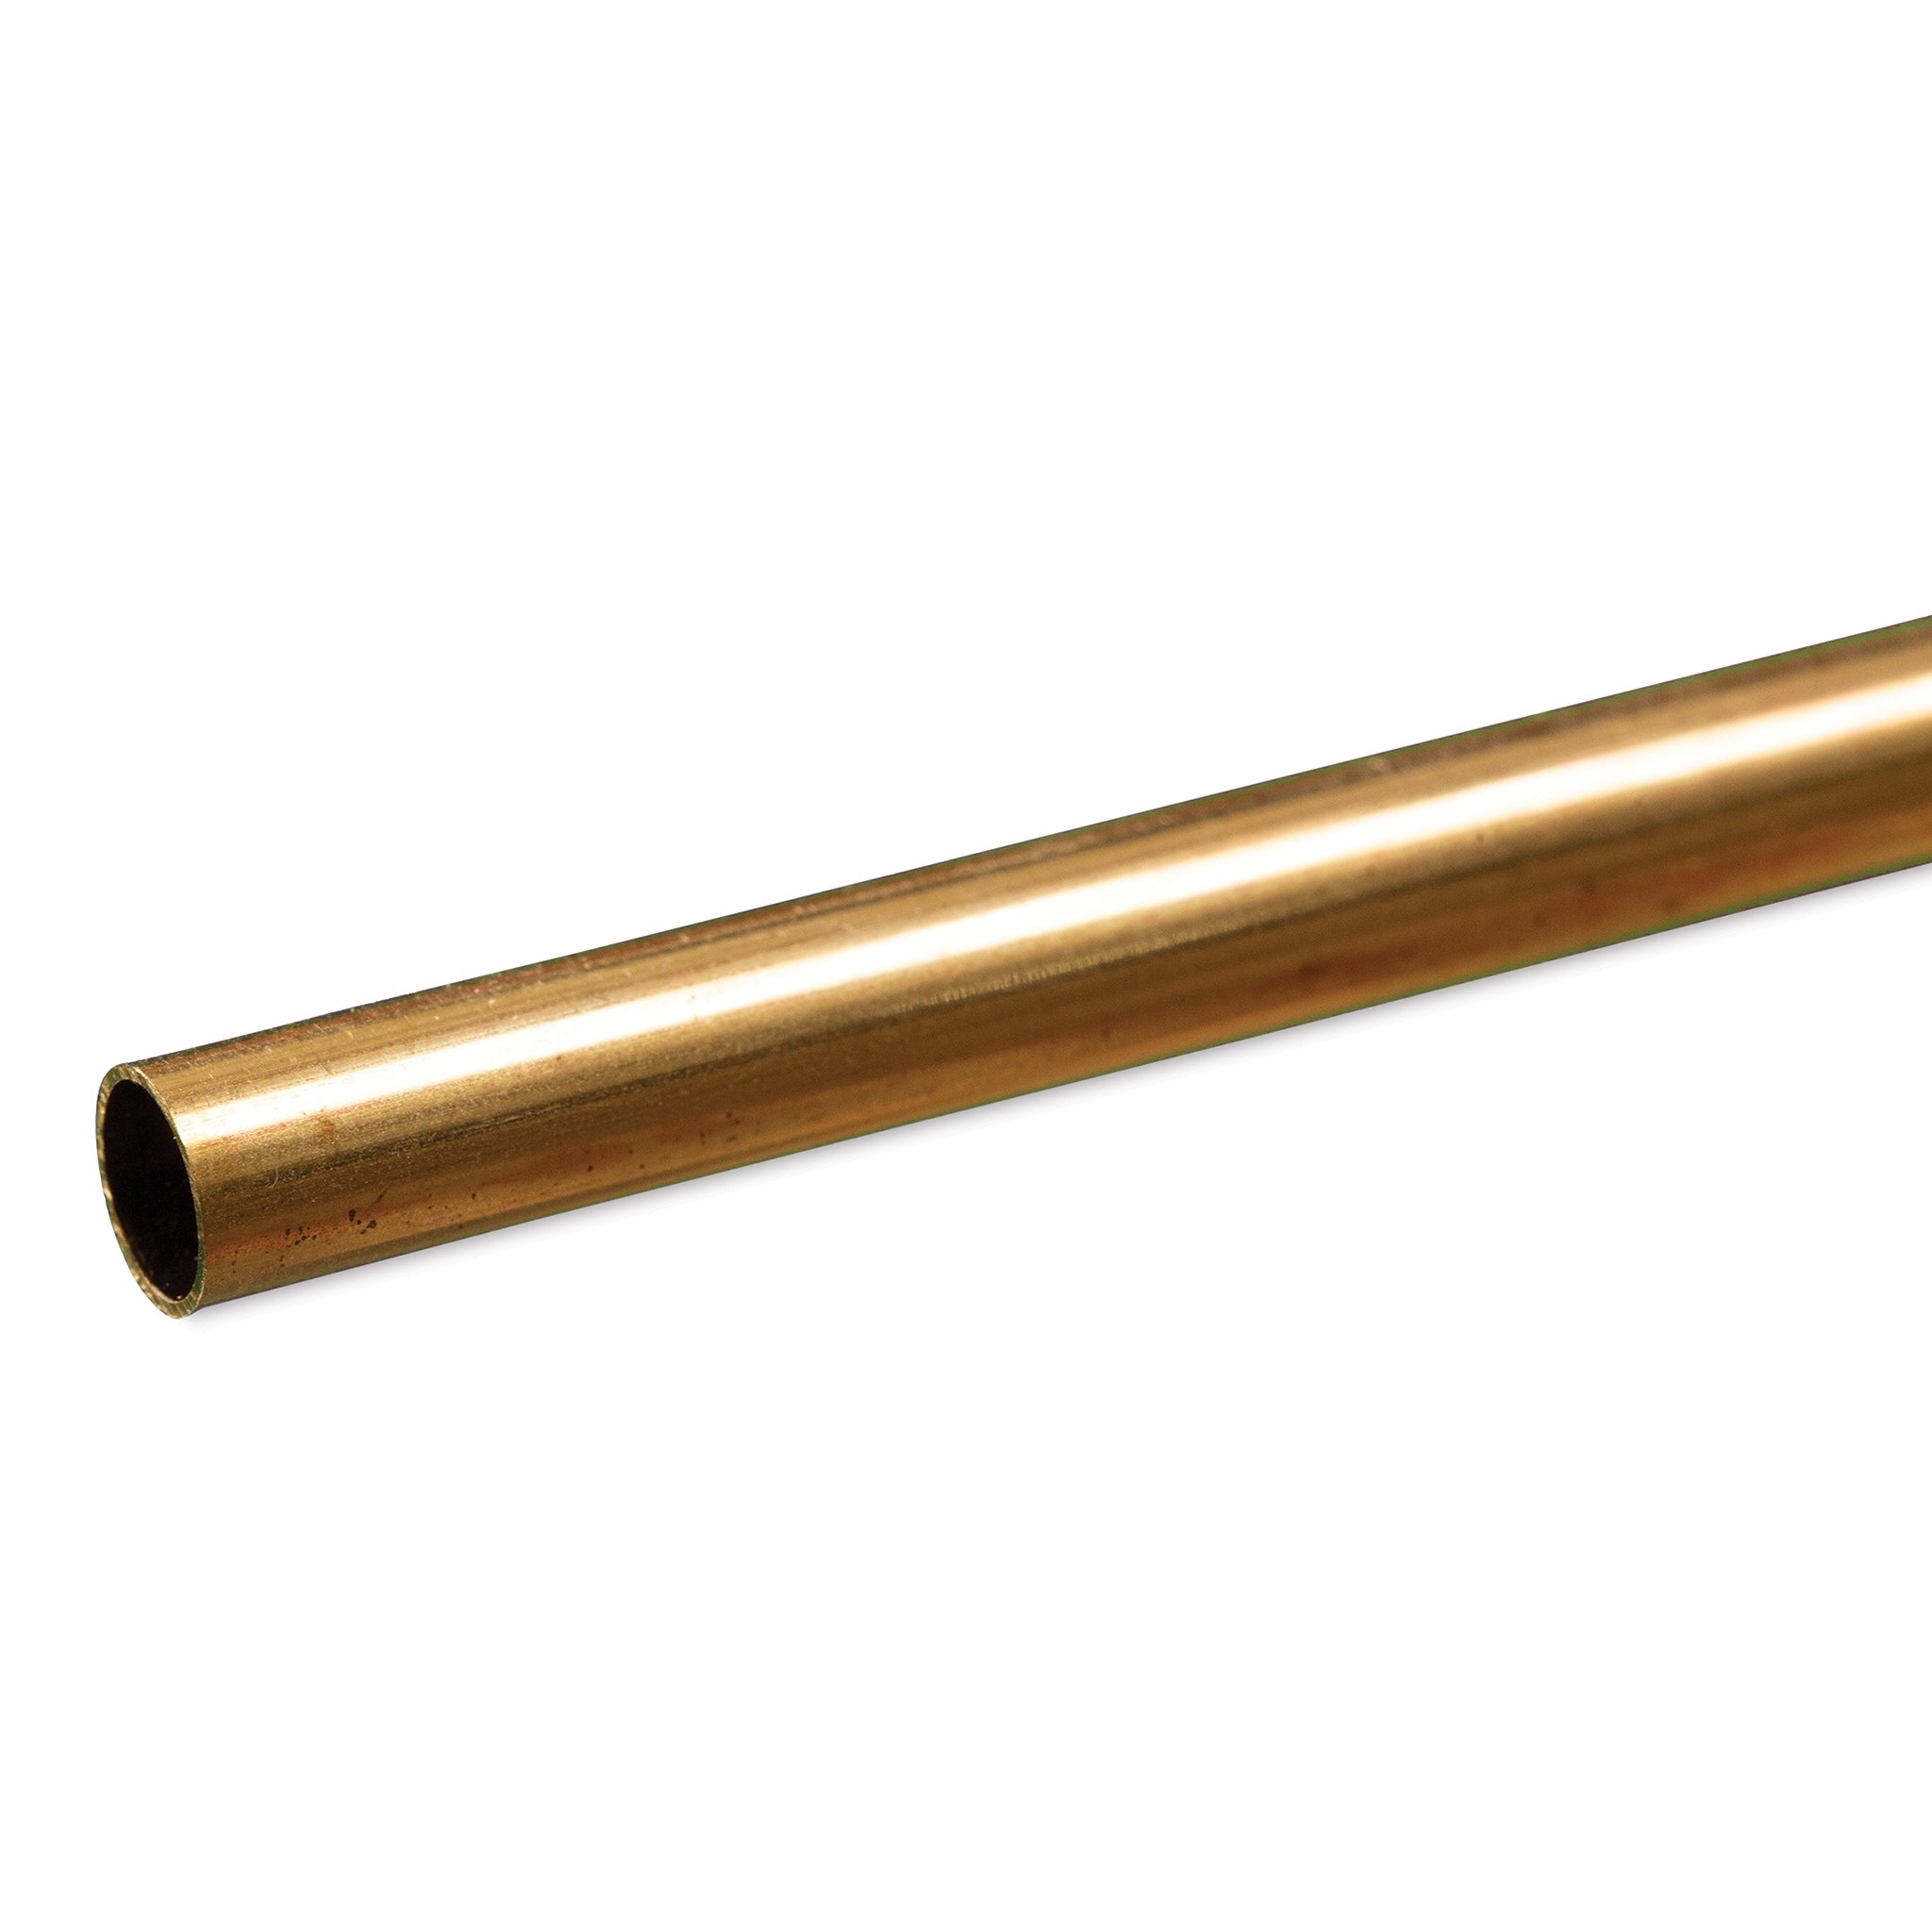 K&S Metals 8131 Round Brass Tube 1/4" OD x 0.014" Wall x 12" Long (1 Piece)